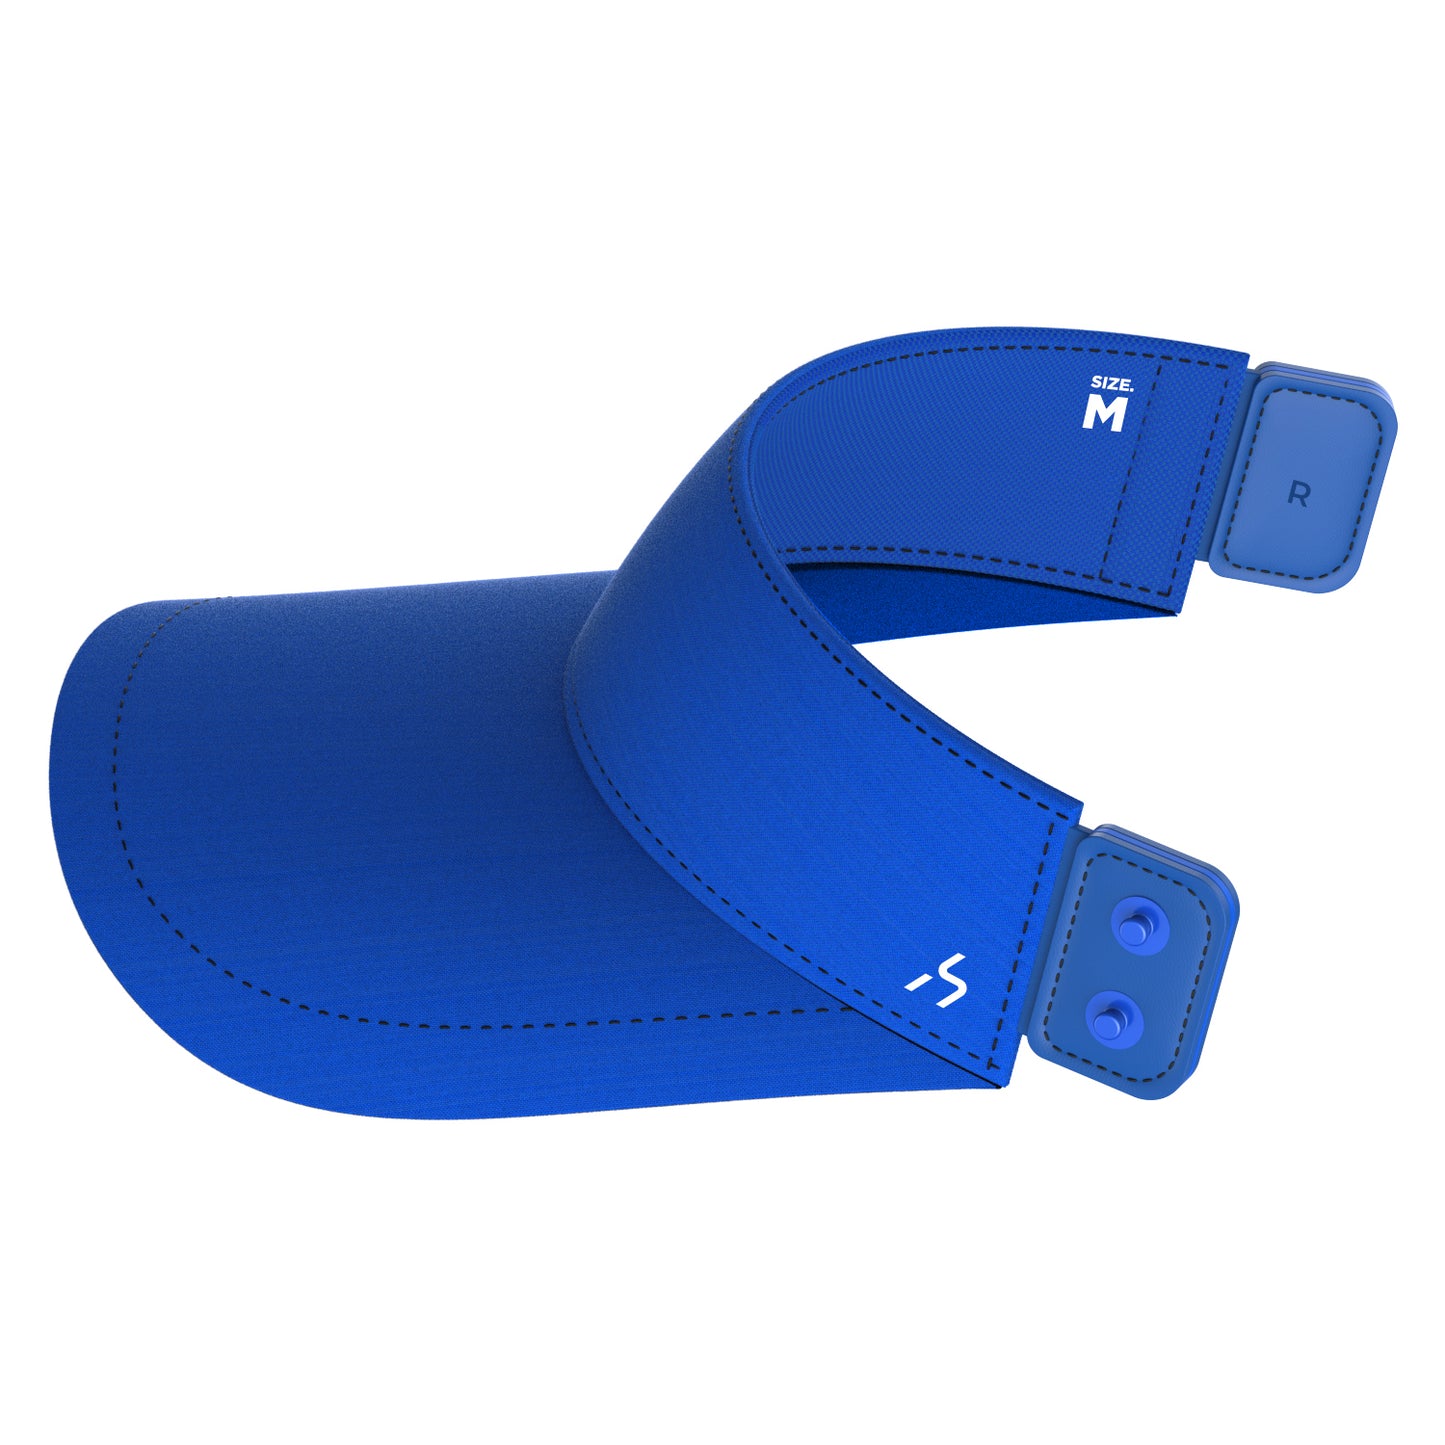 HAKII 帽檐适用于 HAKII MIXV 和 MIX（蓝色）